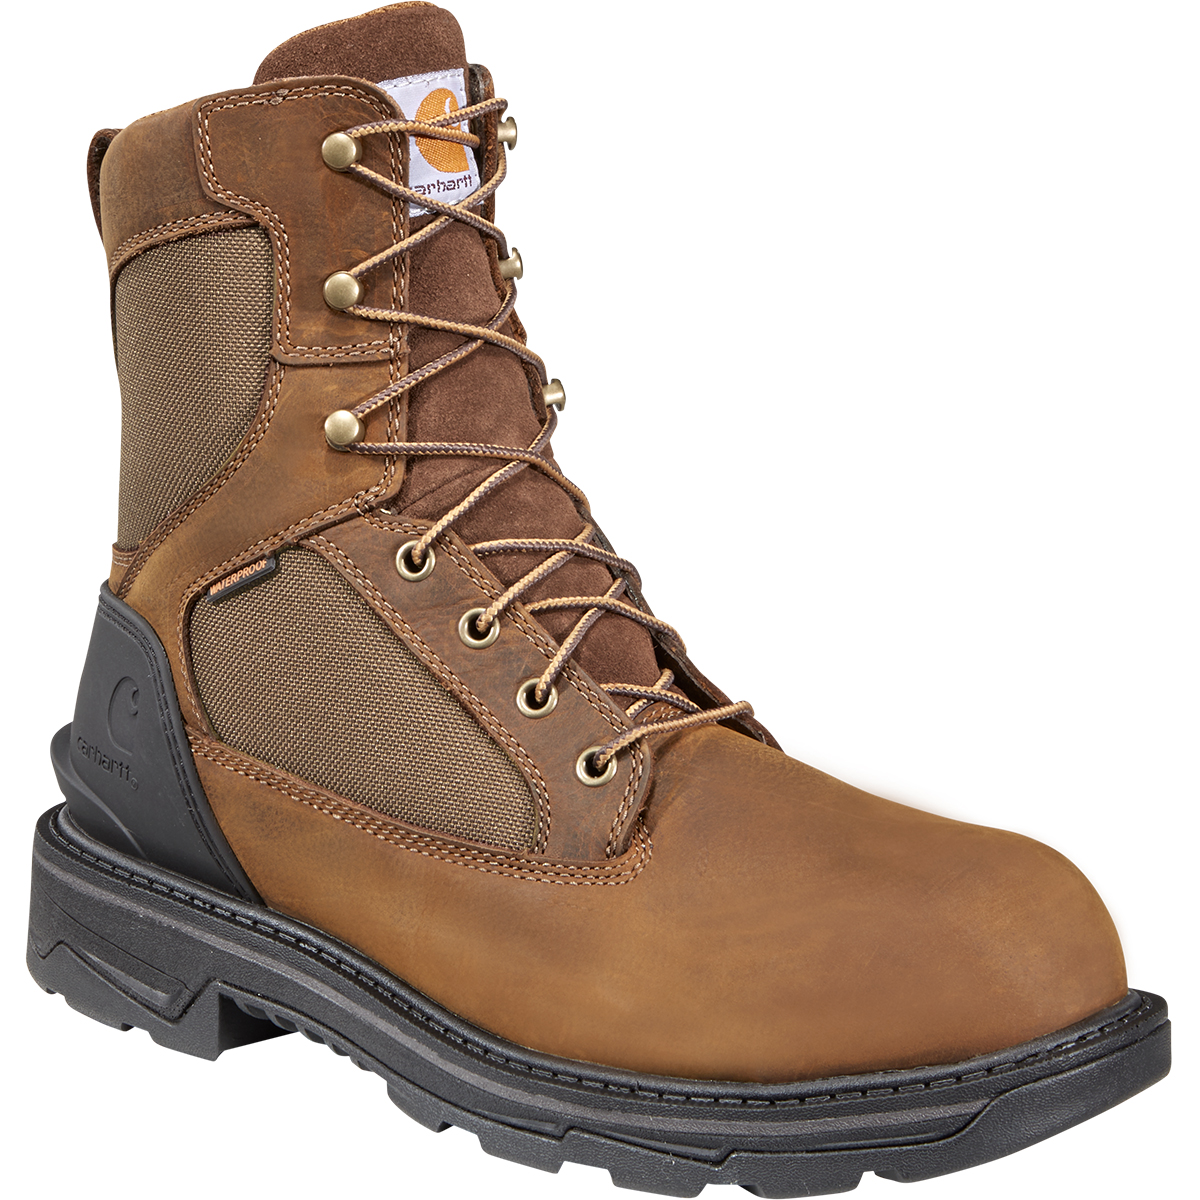 Carhartt Men's Ironwood Waterproof 8" Alloy Toe Work Boots, Wide